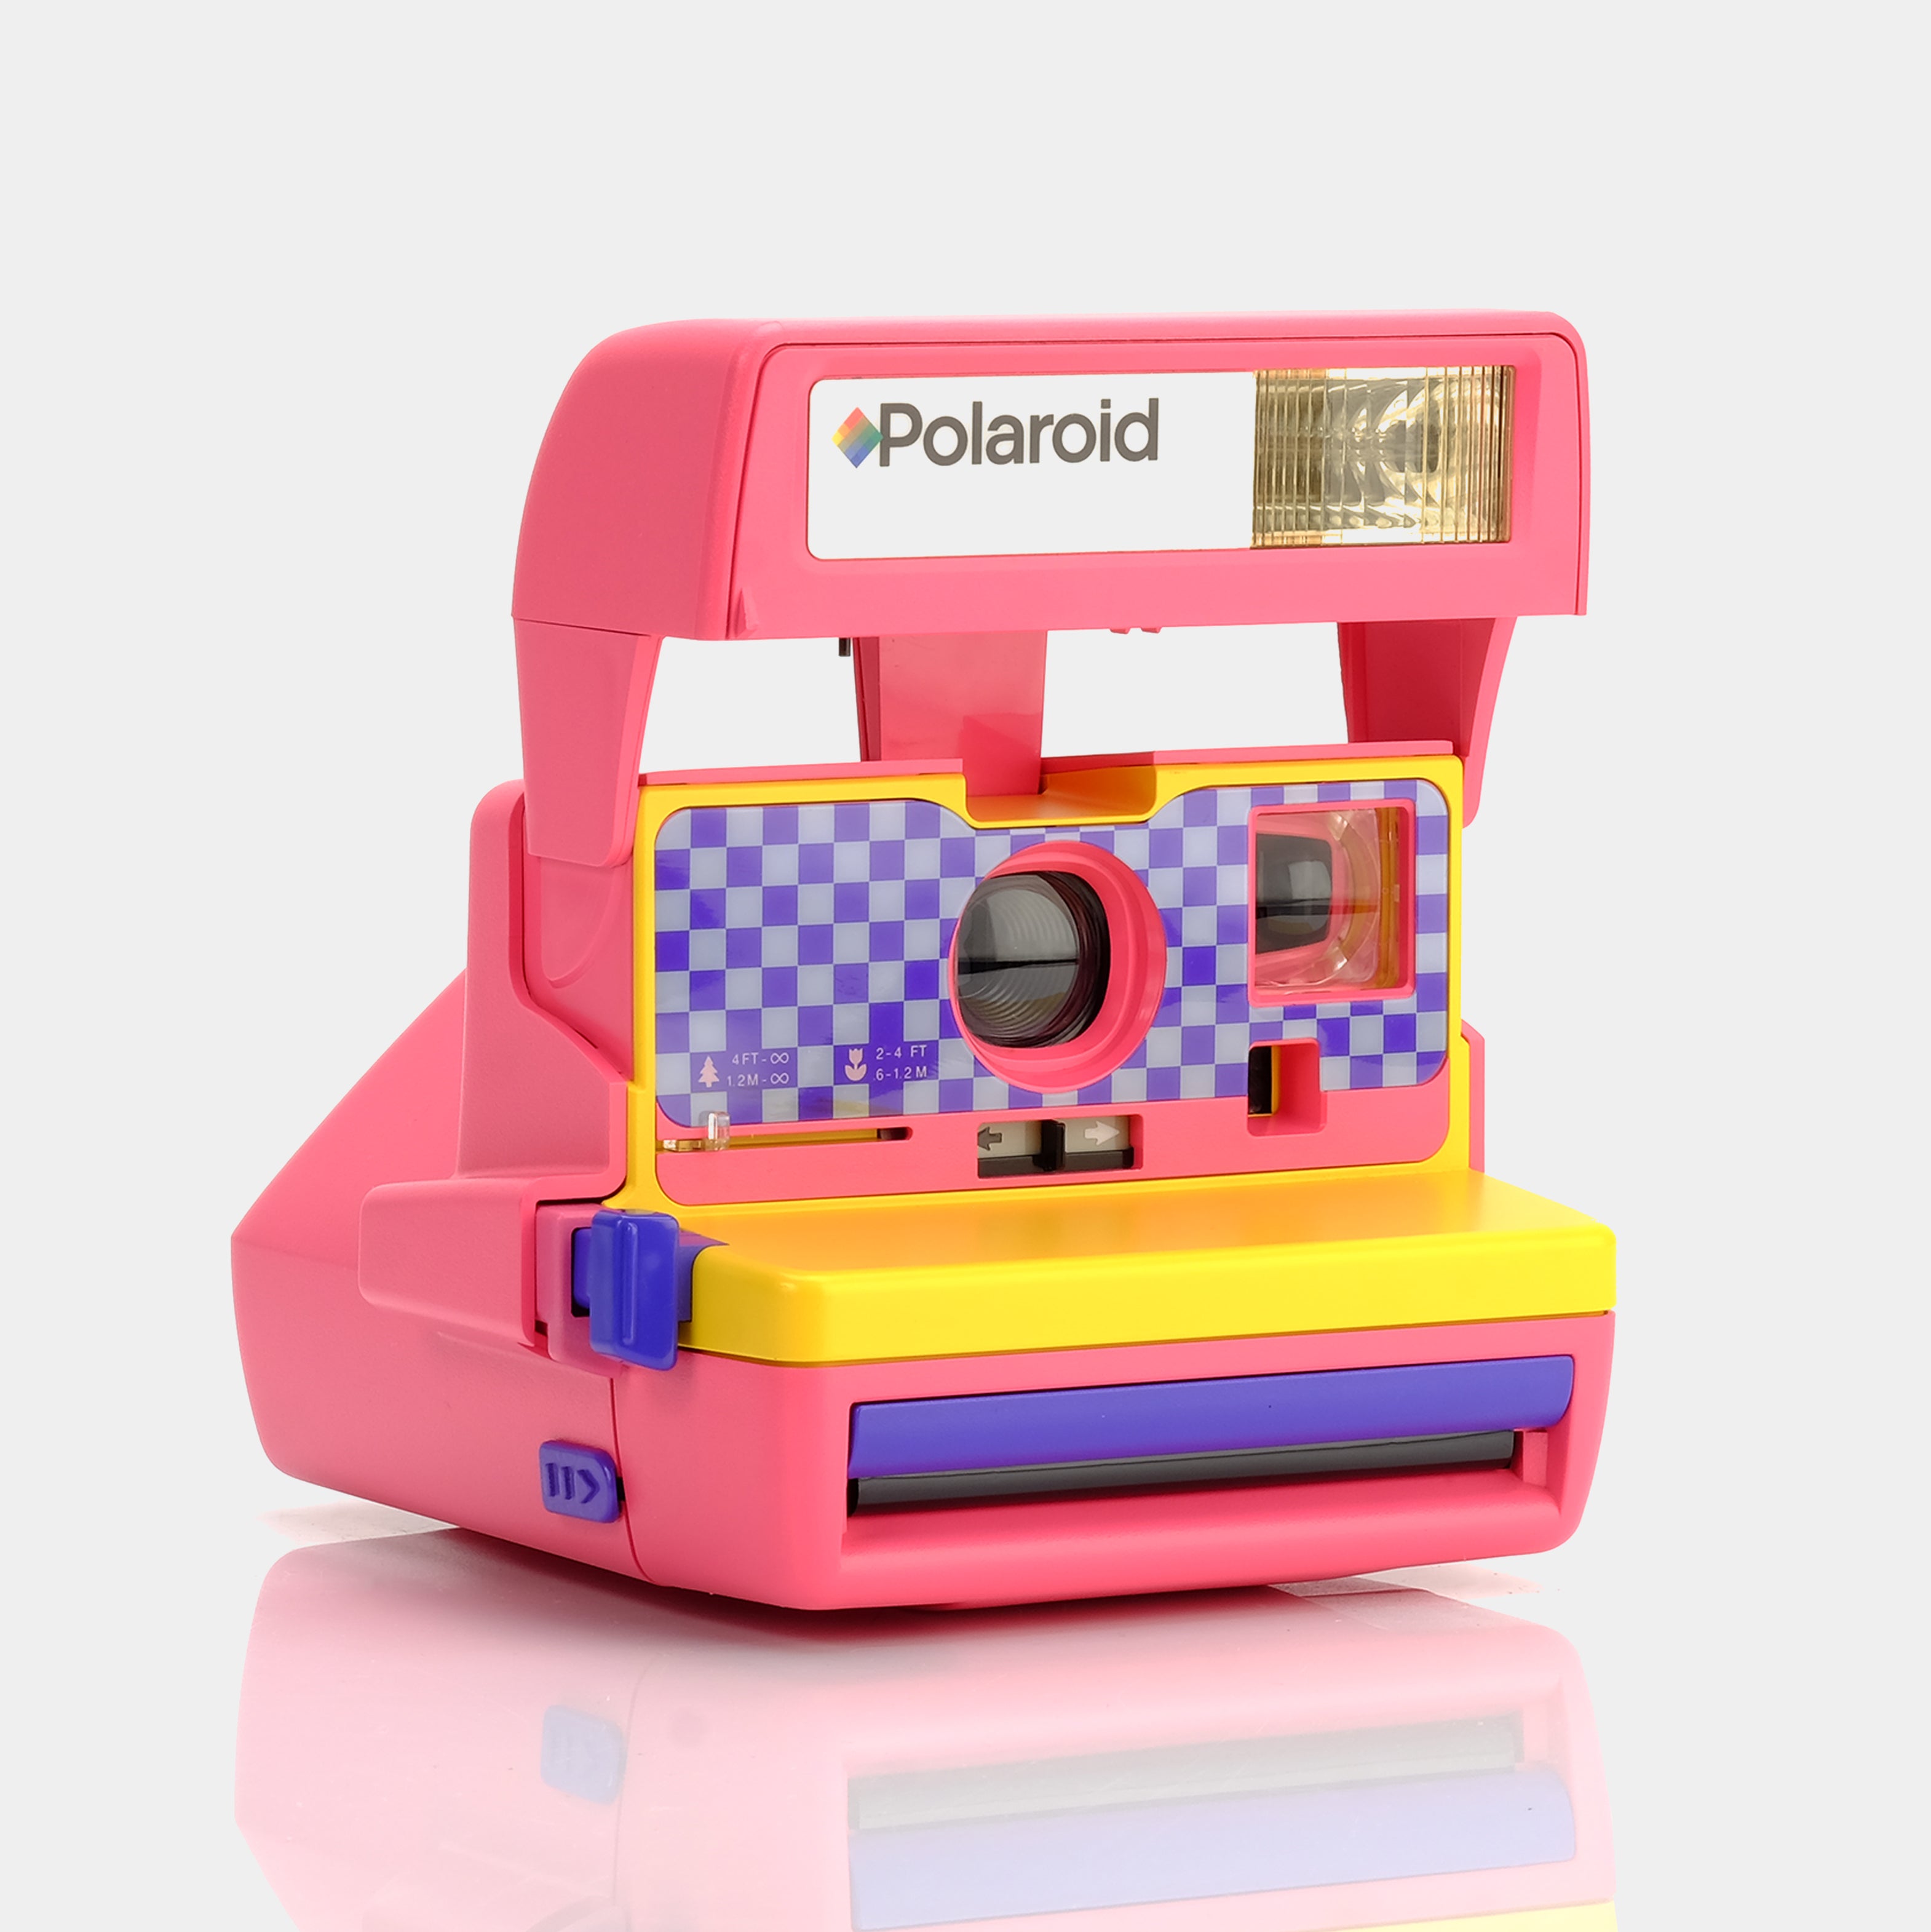 Polaroid 600 Pink Checkers Instant Film Camera